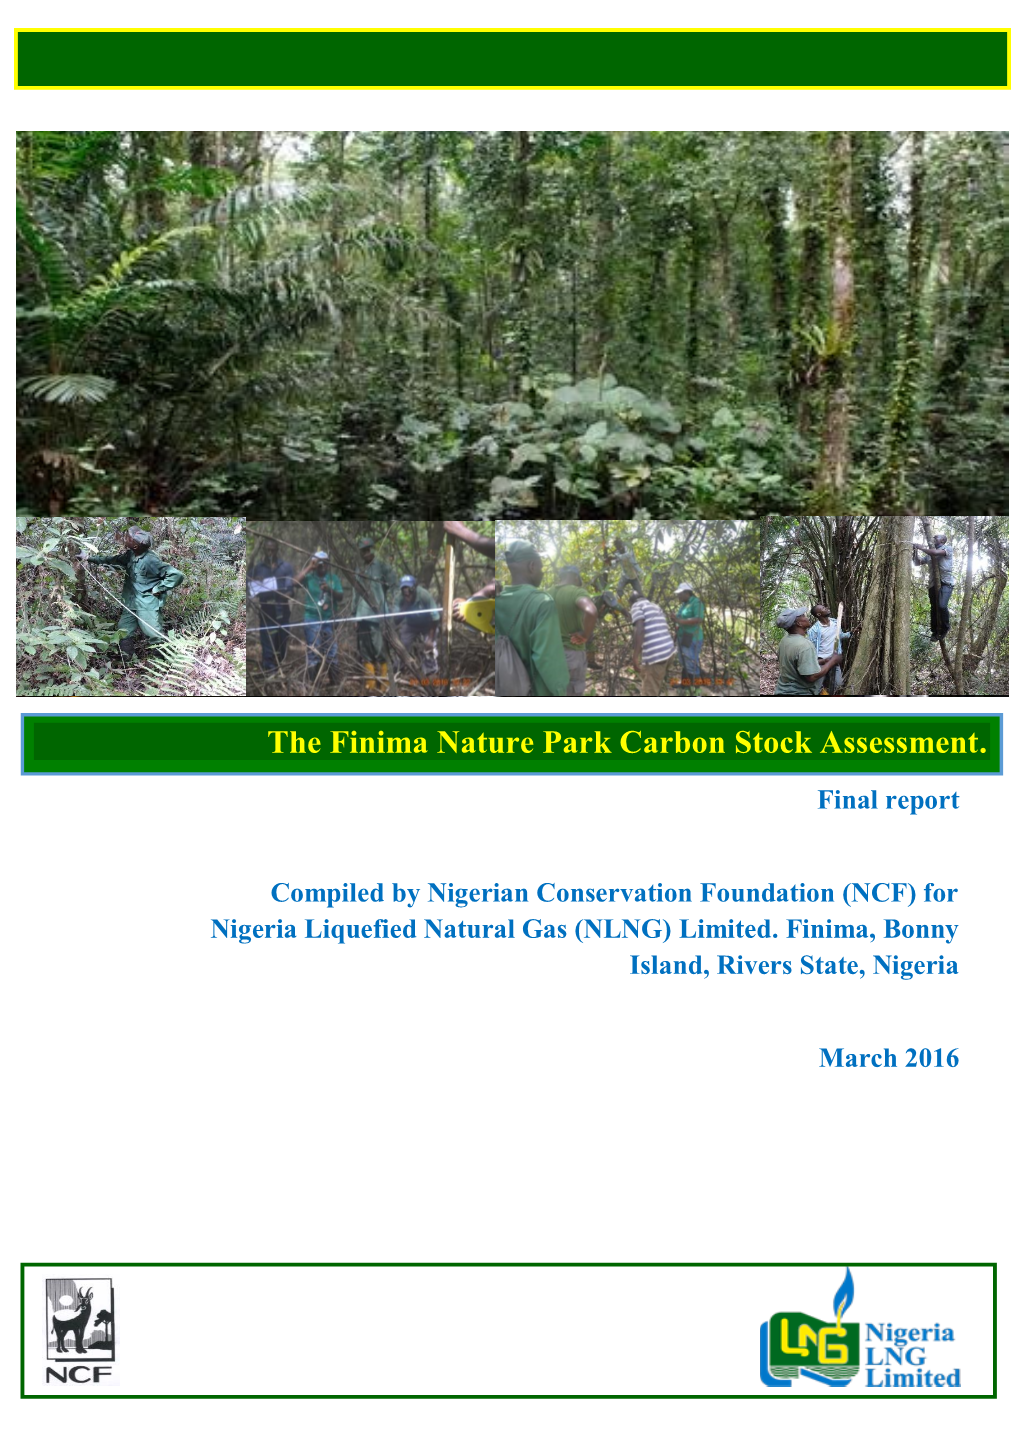 The Finima Nature Park Carbon Stock Assessment. Final Report